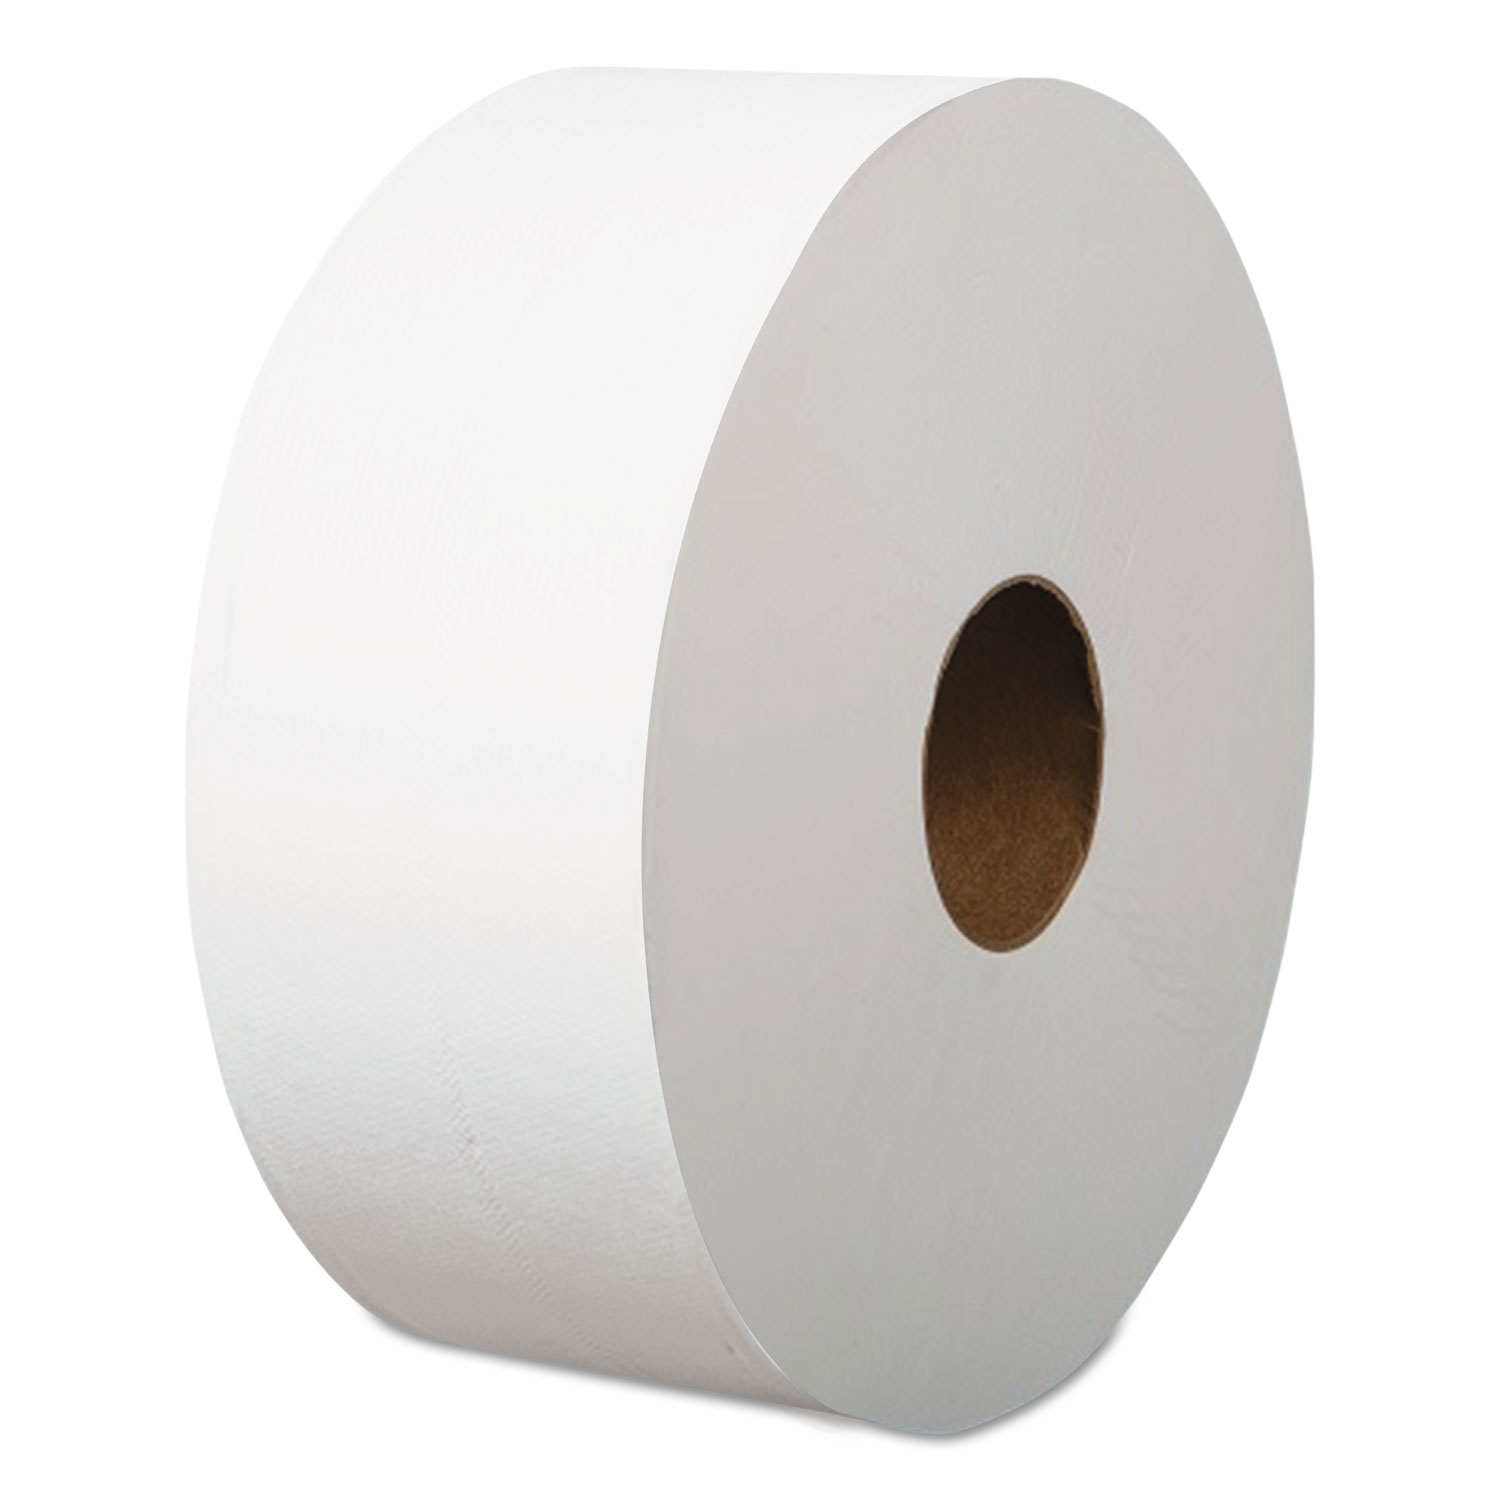 Jumbo Roll Bathroom Tissue, 1-Ply, White, 3.4 x 1200 ft, 12 Rolls/Carton